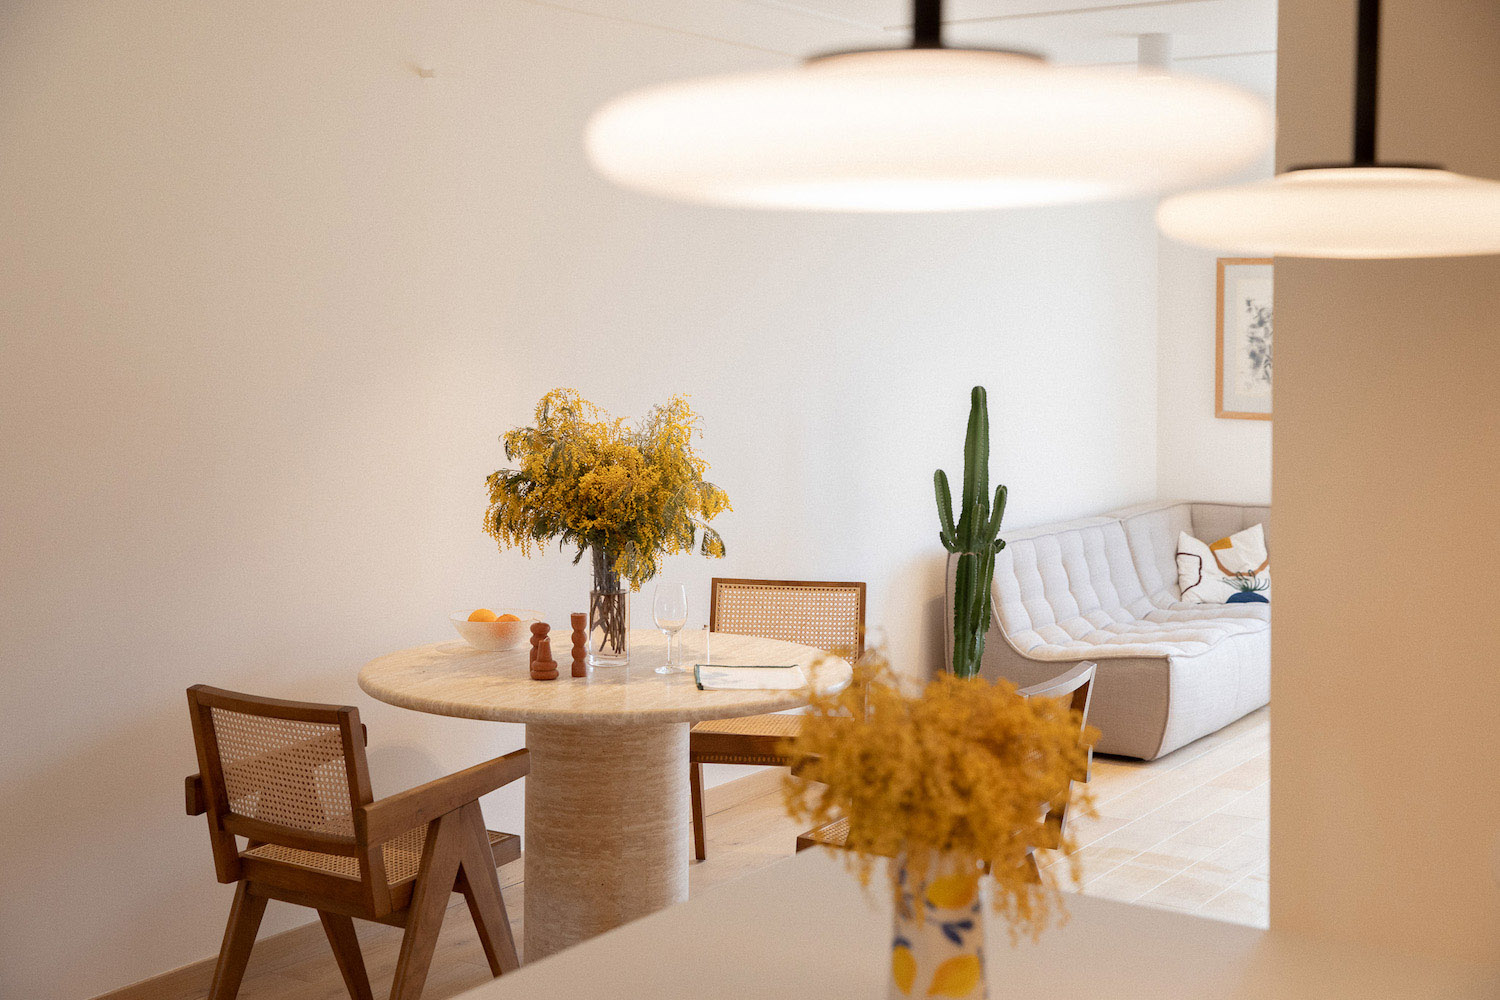 Studio Cent Soixante,公寓设计,法国,100㎡,公寓设计案例,公寓设计方案,极简风格,极简主义